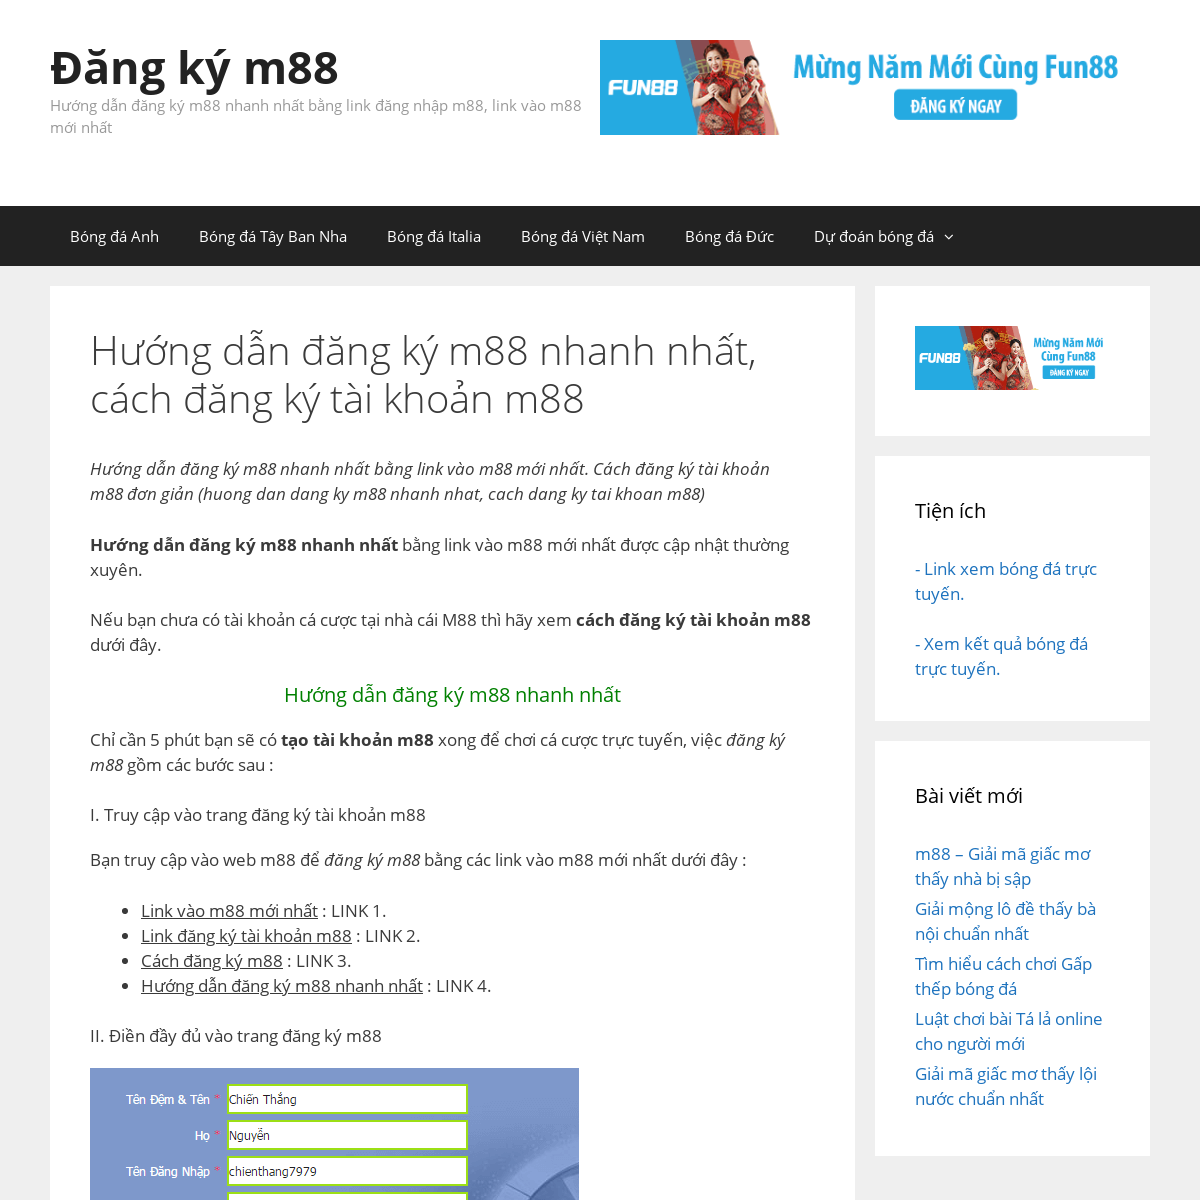 A complete backup of huong-dan-dang-ky-m88-nhanh-nhat.com